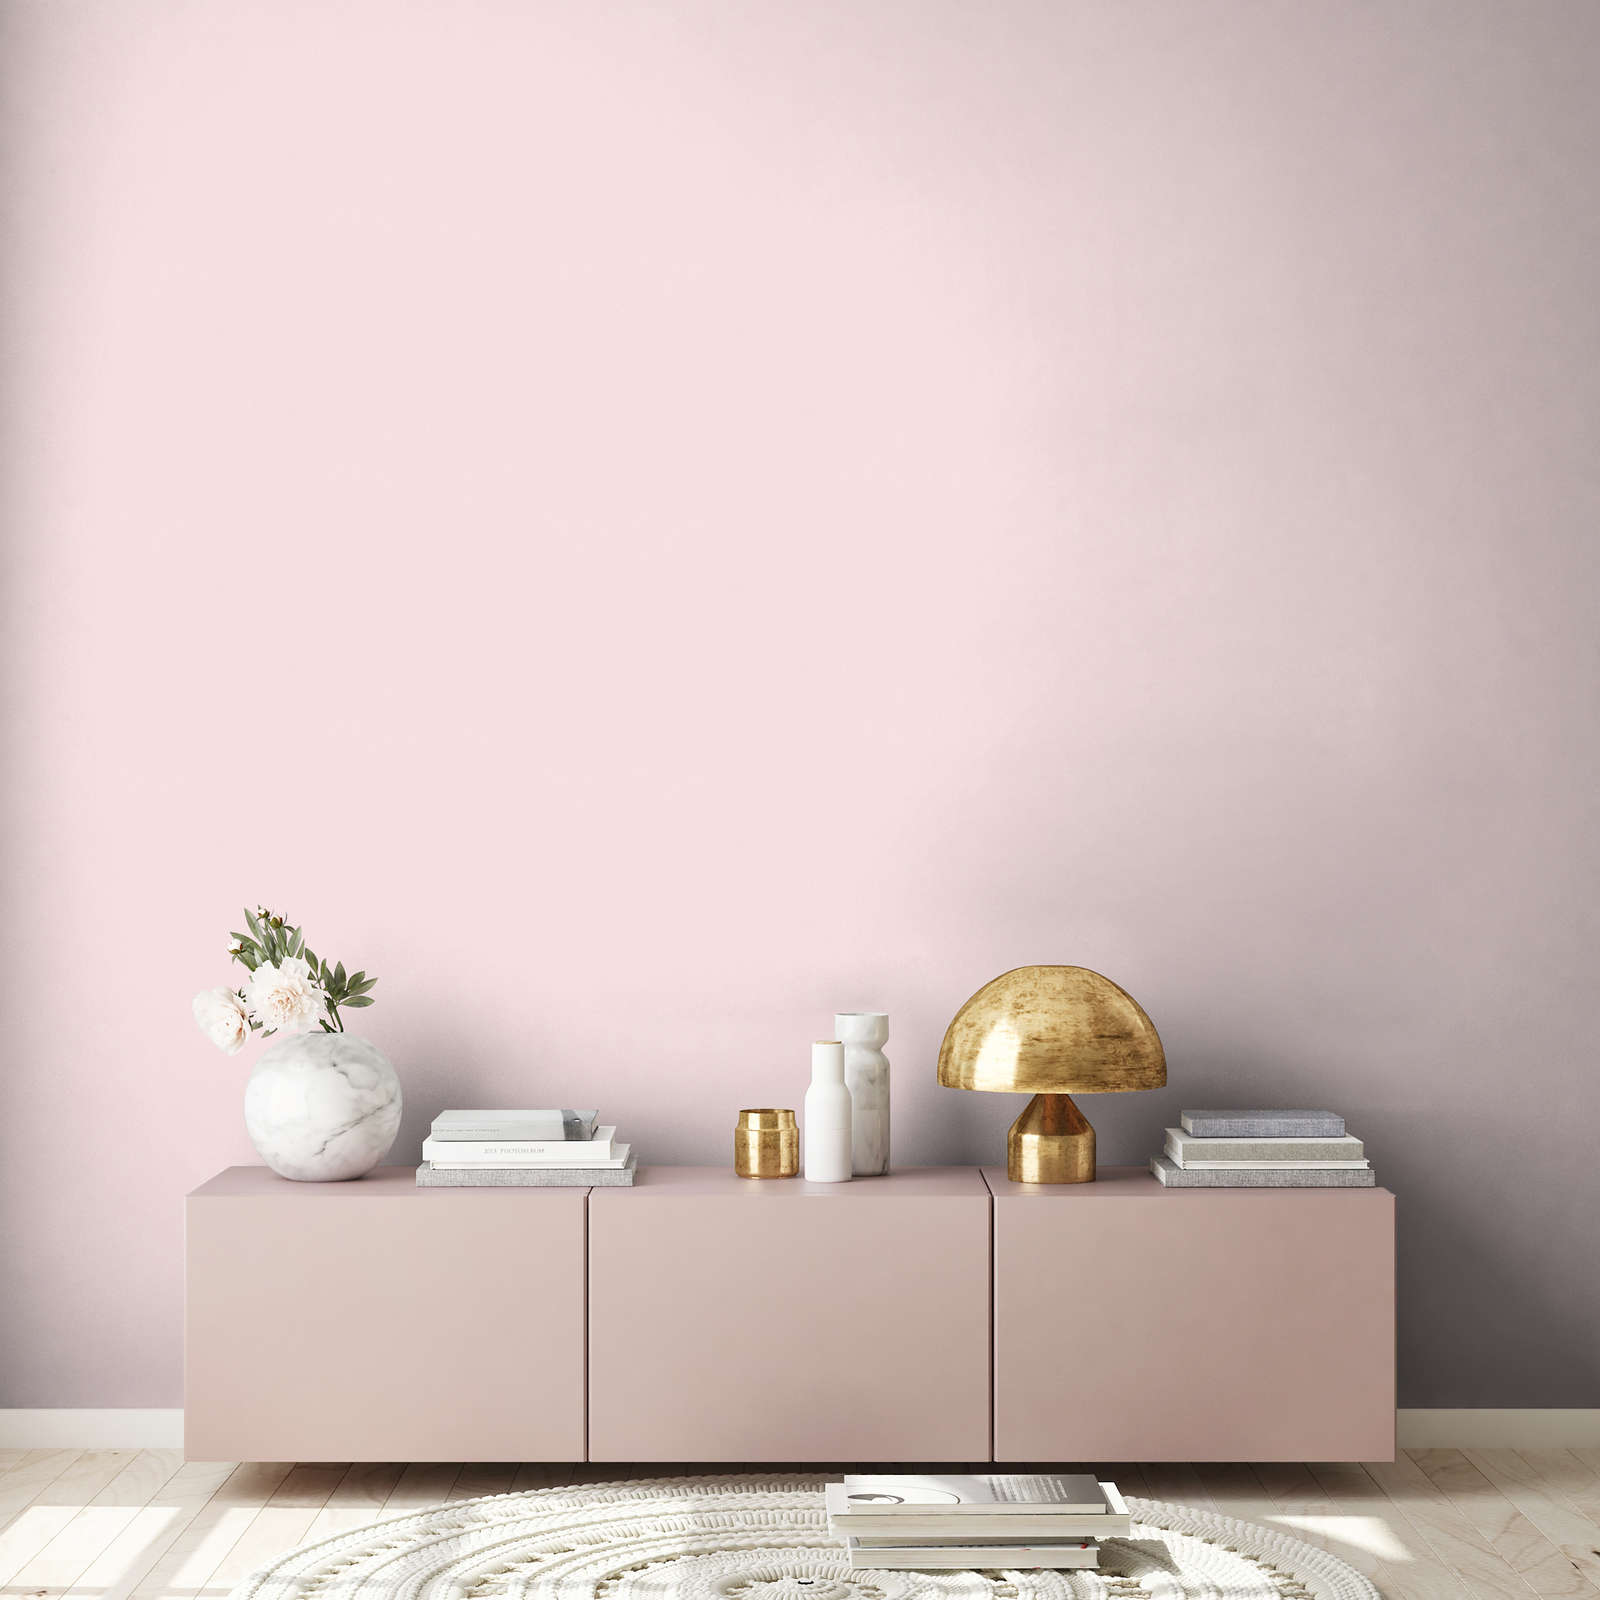             Plain wallpaper with a light textured look - pink
        